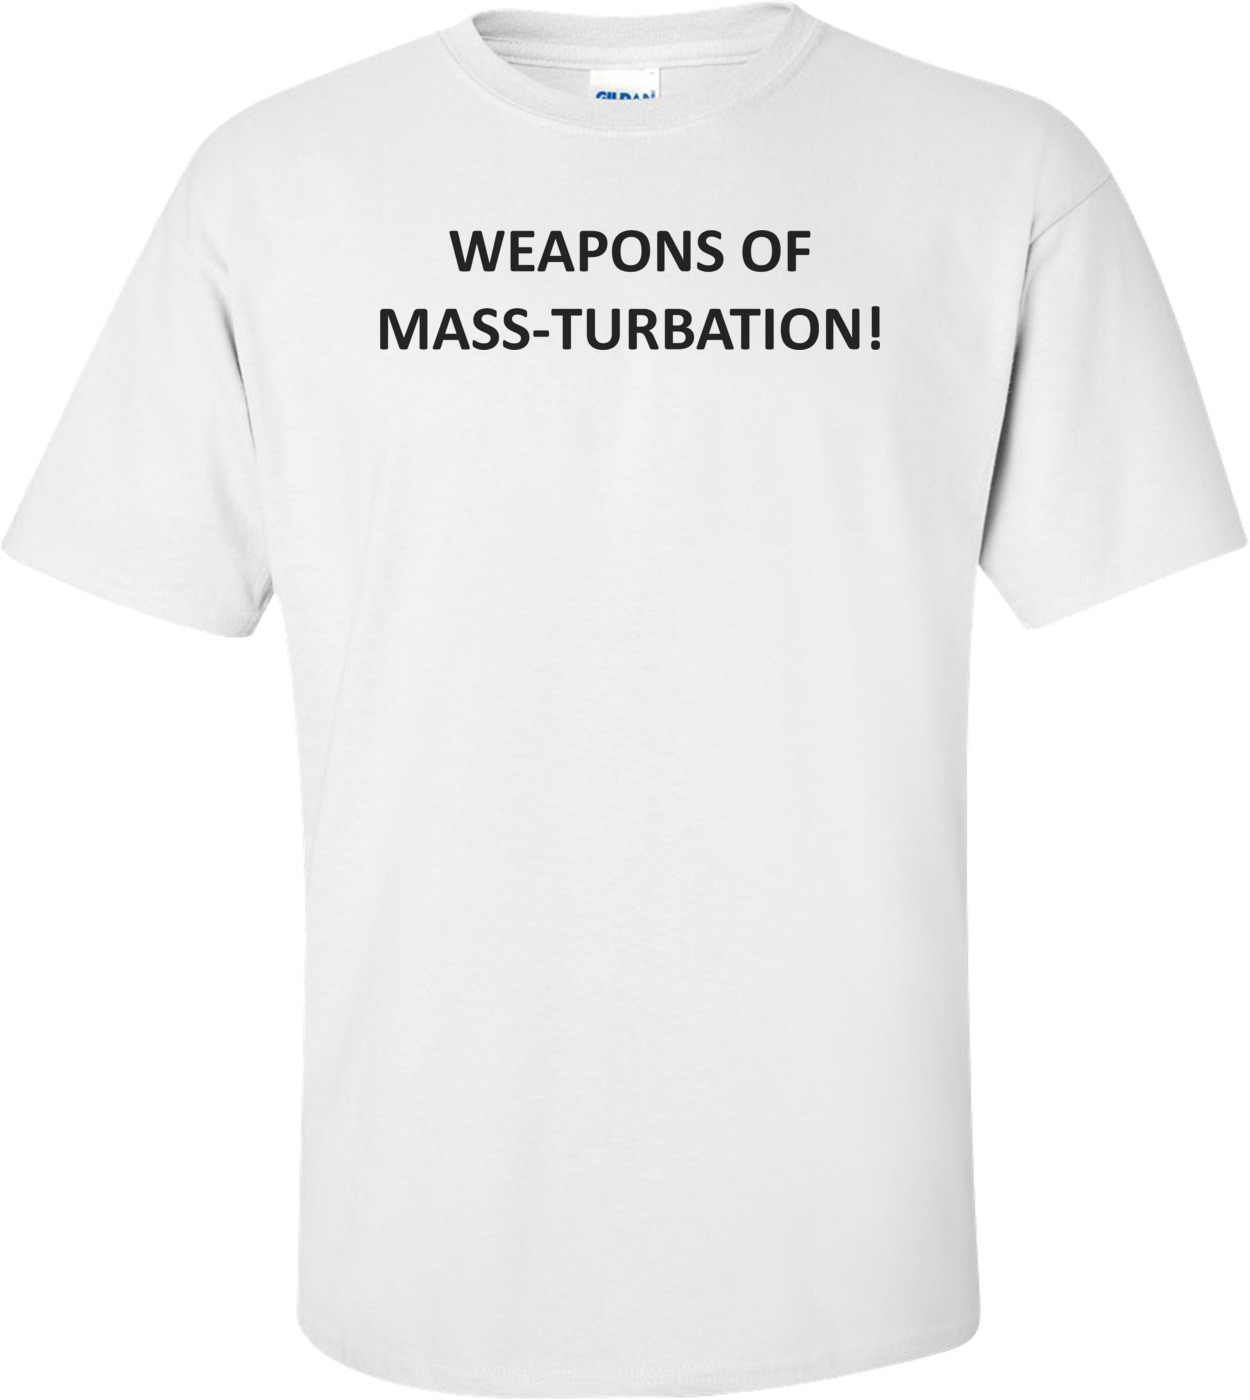 WEAPONS OF MASS-TURBATION! Shirt